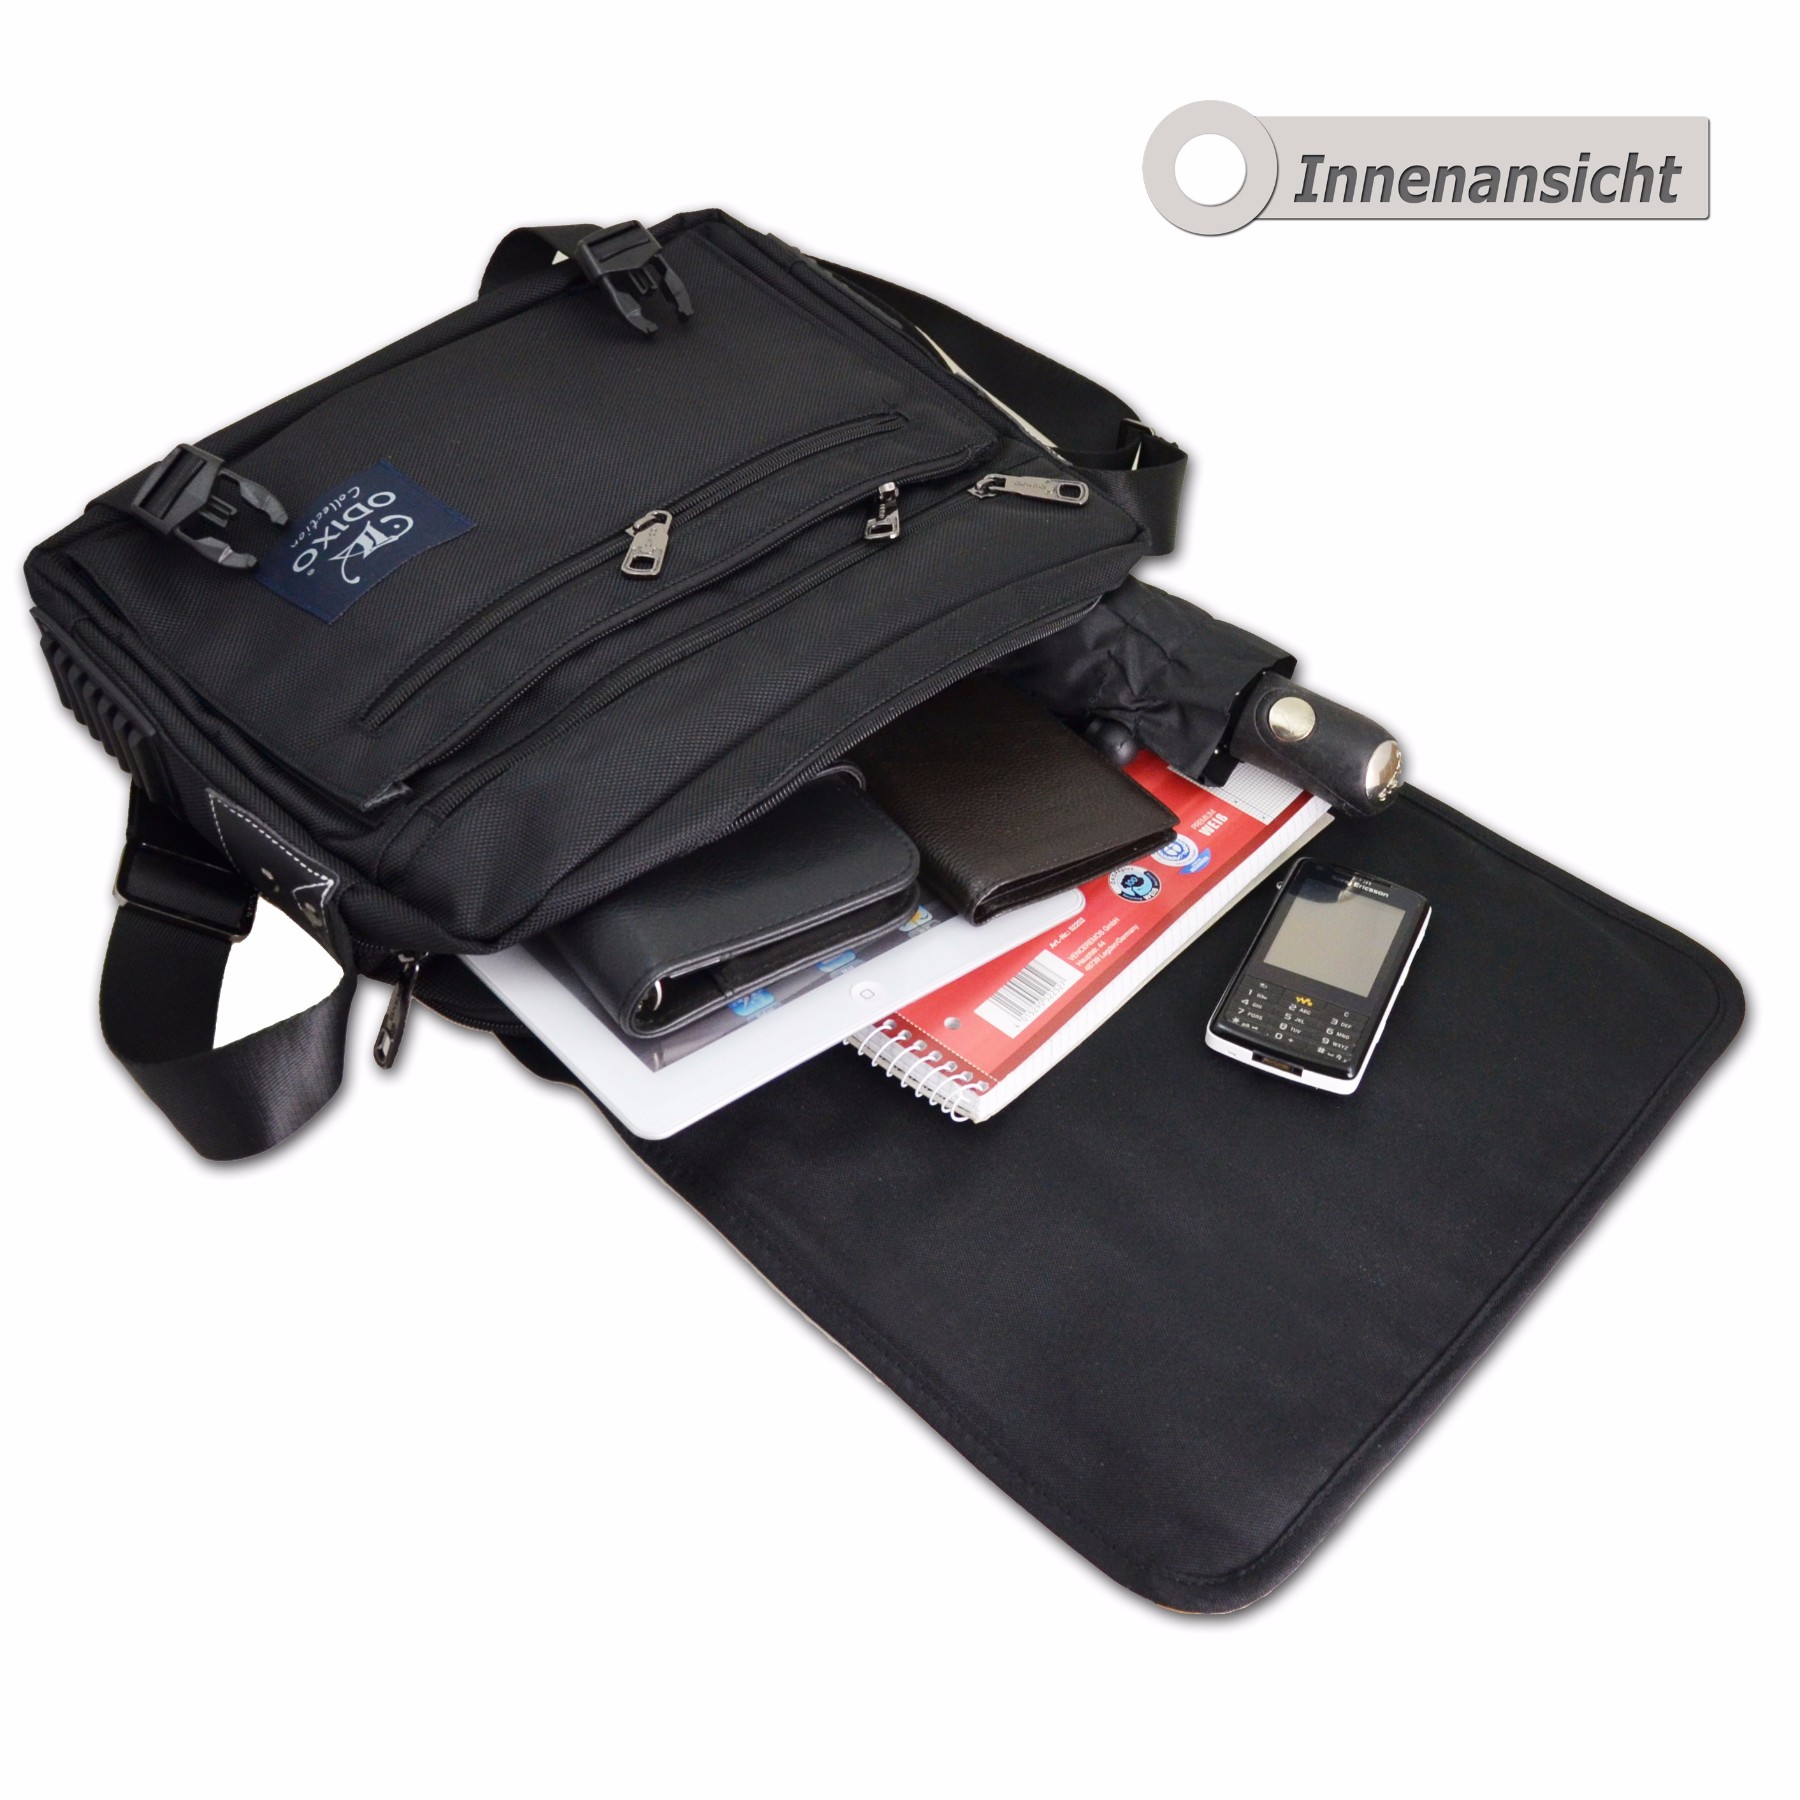 ODIXO Umhängetasche Messenger Bag B260-1 Professional Edition mit Tablet Fach